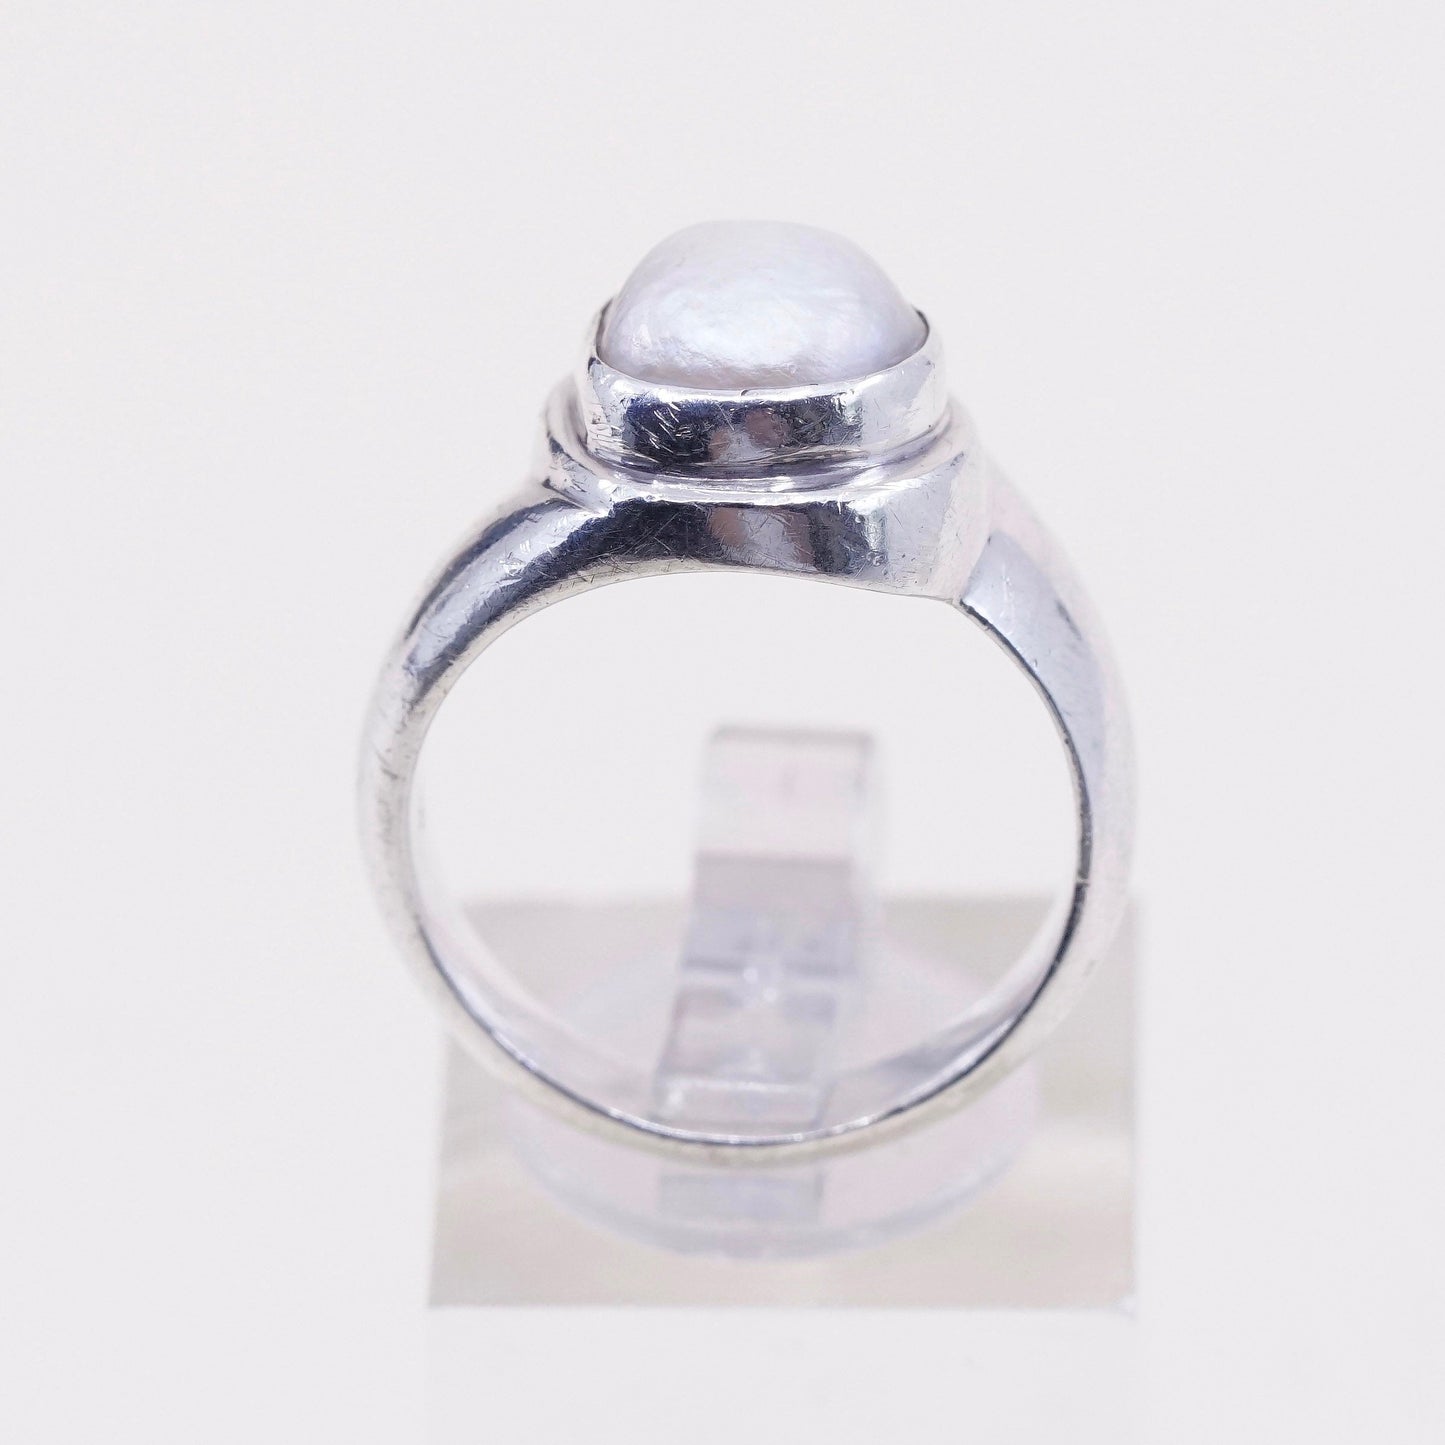 sz 8.5, vtg Sterling silver handmade ring, modern 925 band w//th pearl